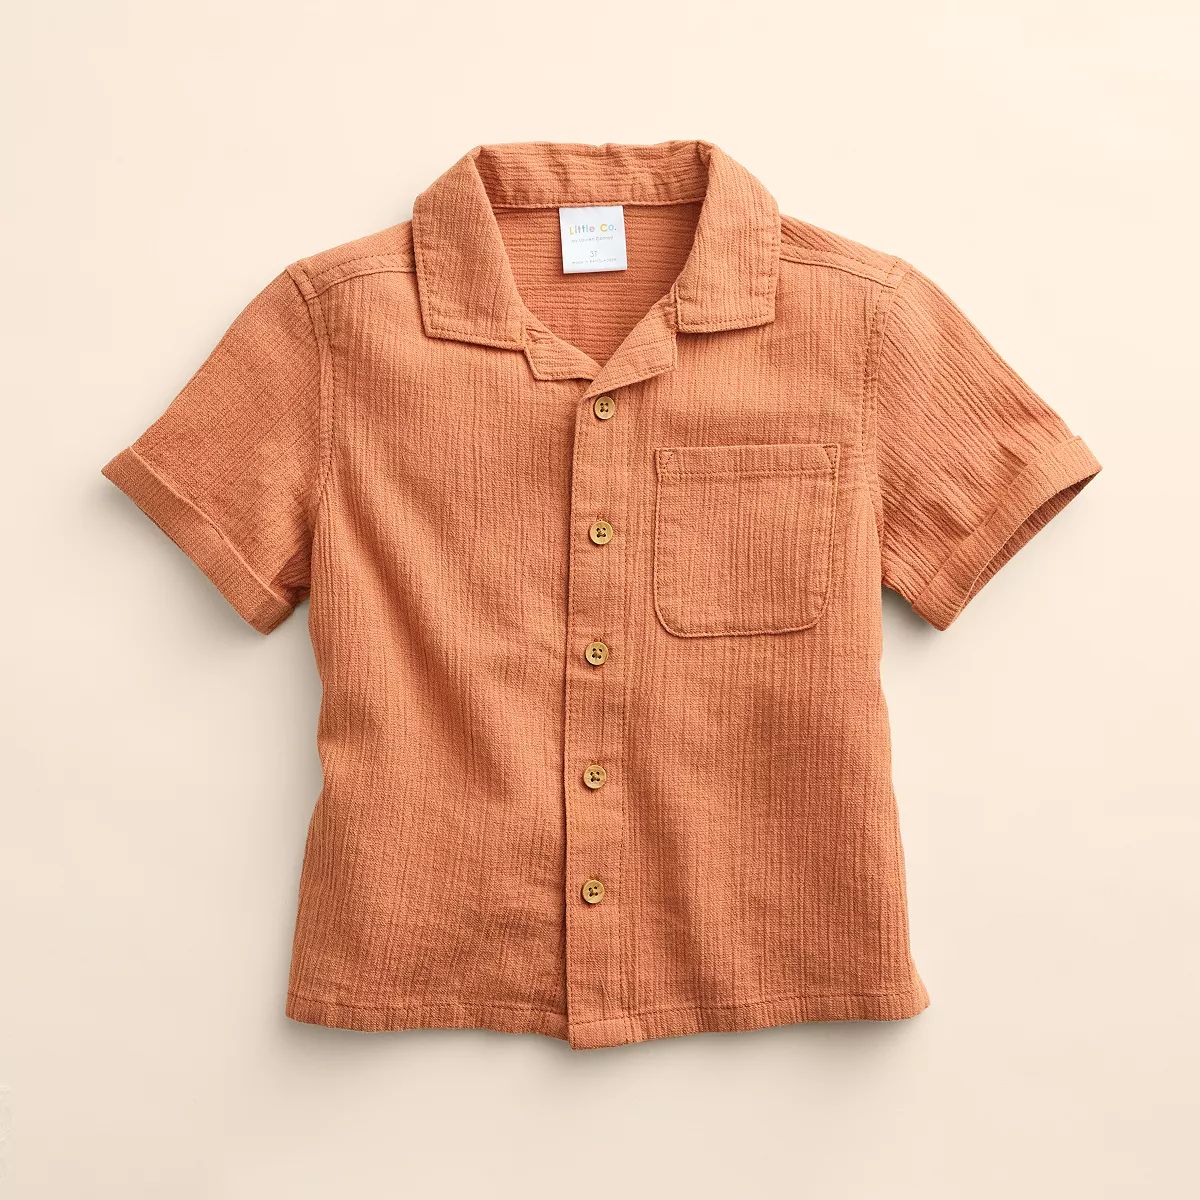 Kids 4-12 Little Co. by Lauren Conrad Organic Cotton Button-Up Shirt | Kohl's